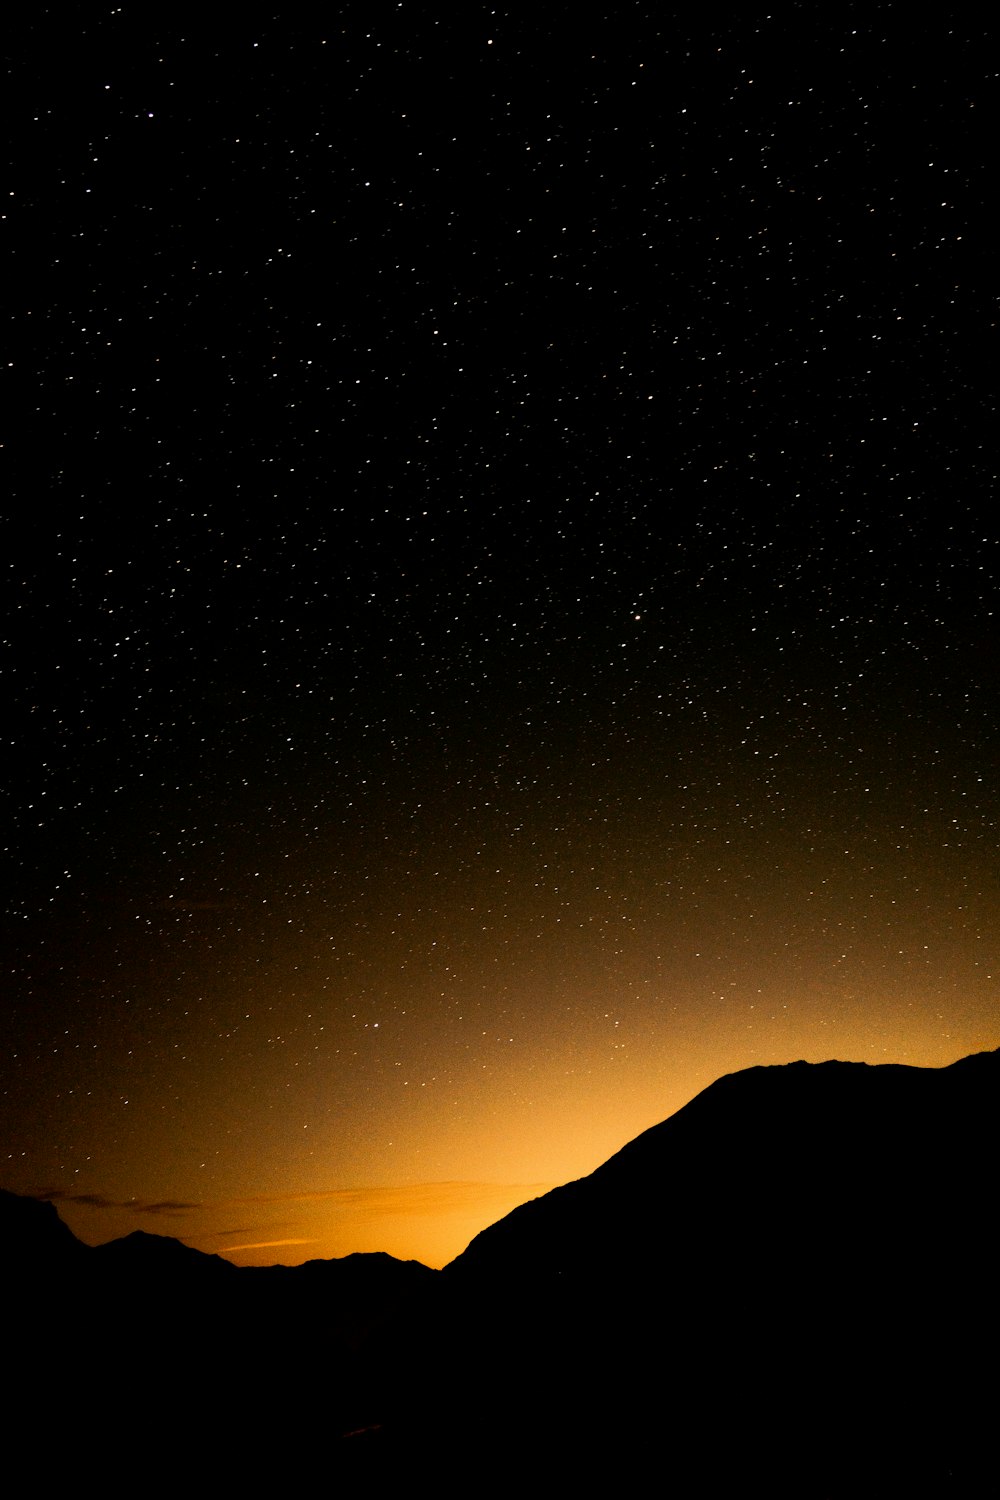 a night sky with stars